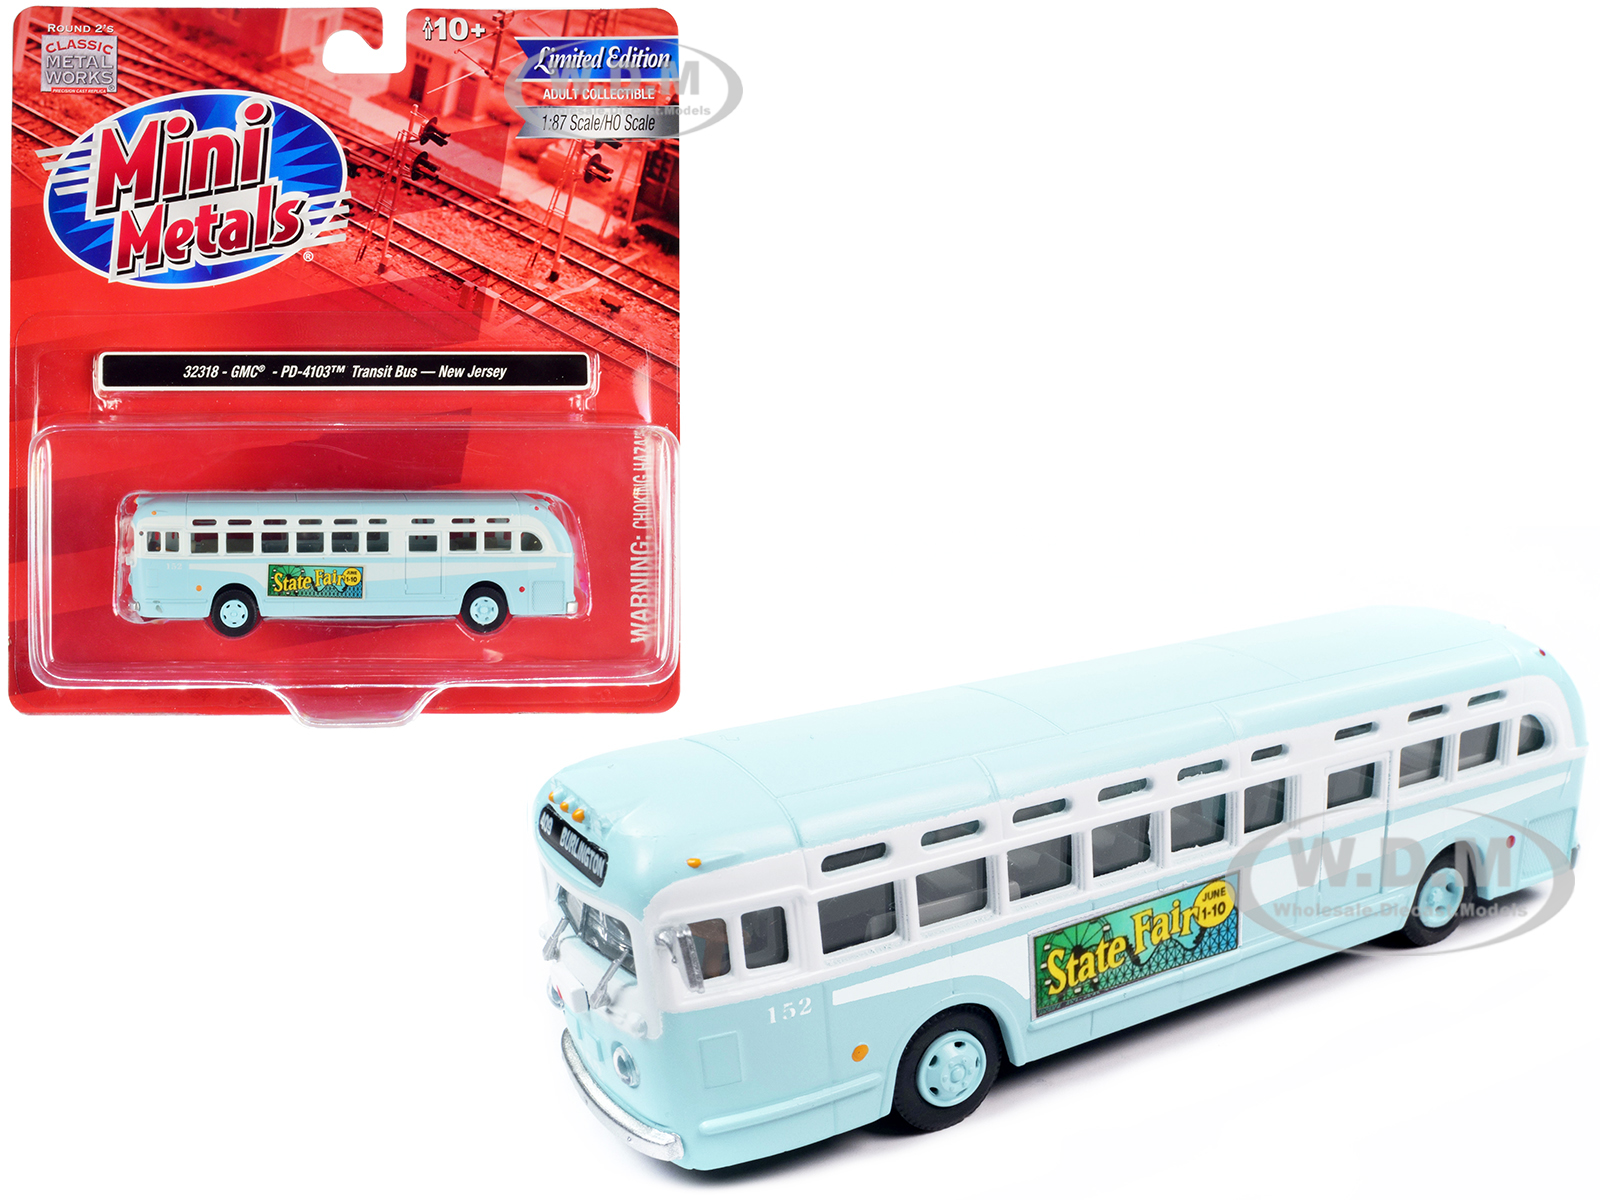 GMC PD-4103 Transit Bus #152 Light Blue Burlington New Jersey 1/87 (HO) Scale Model by Classic Metal Works